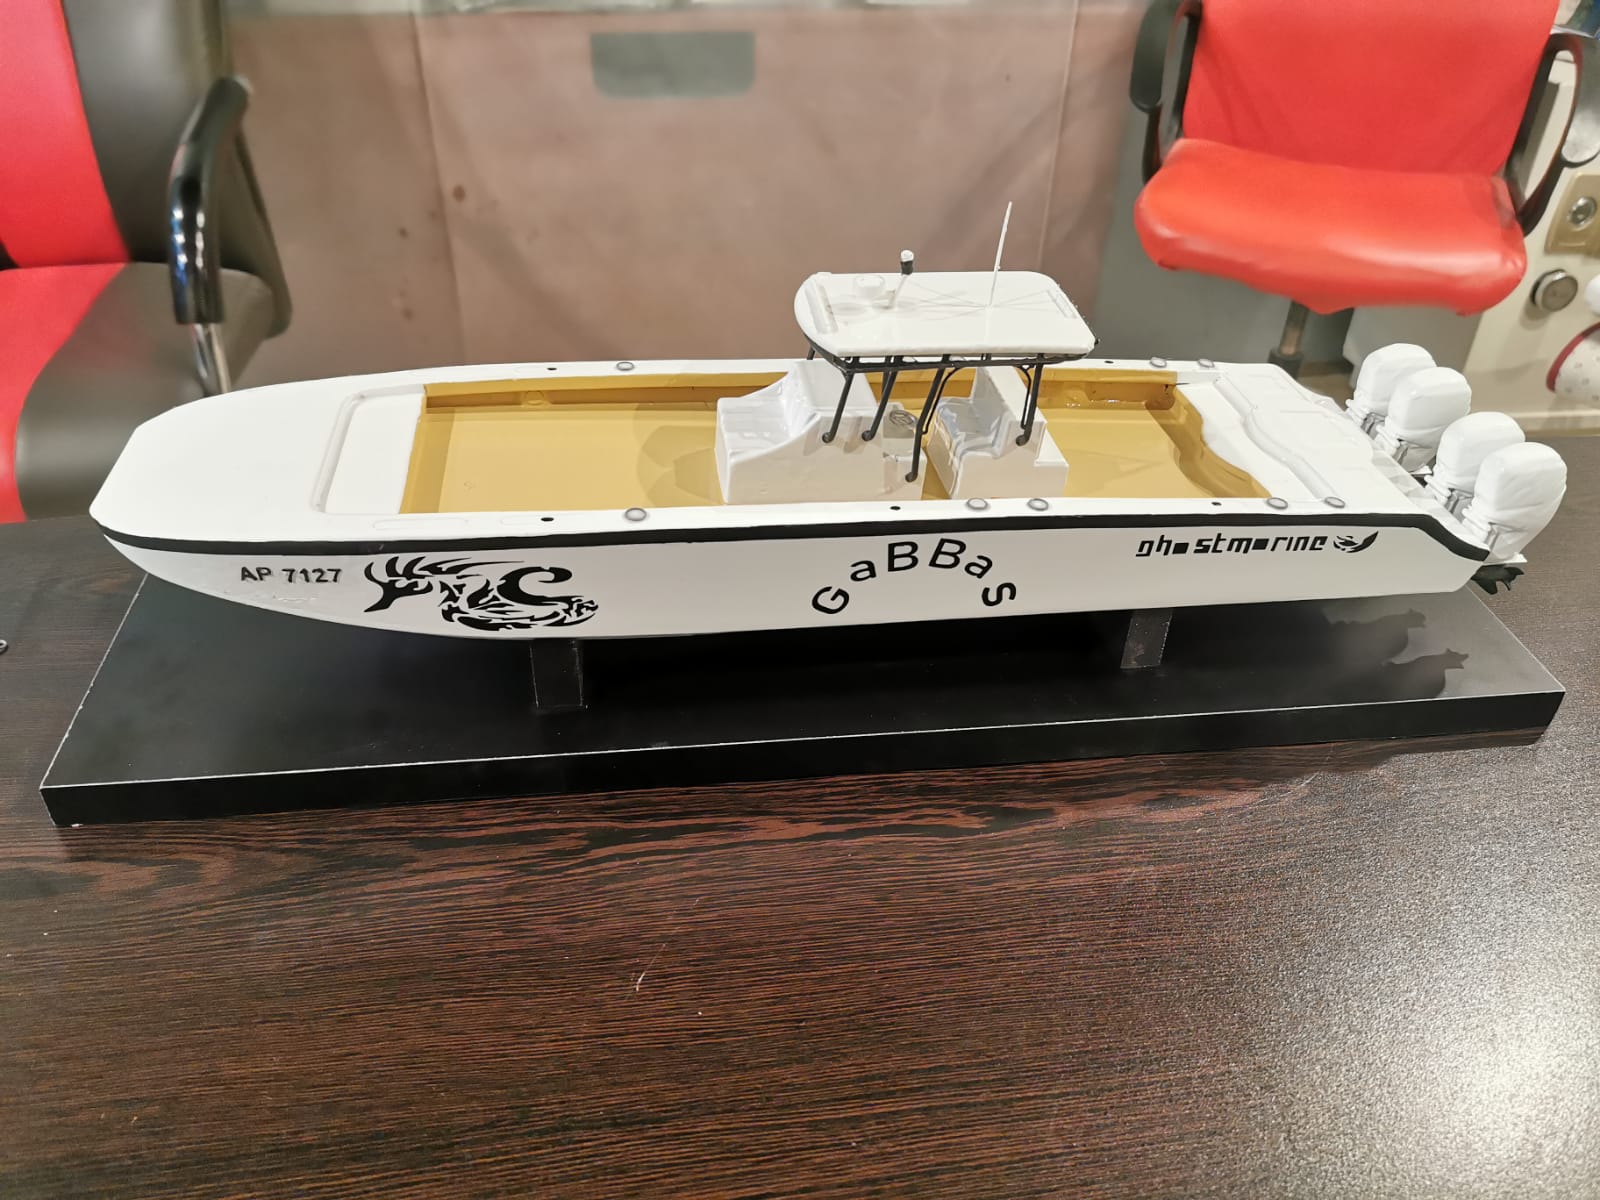 3D Printed Boat.jpeg